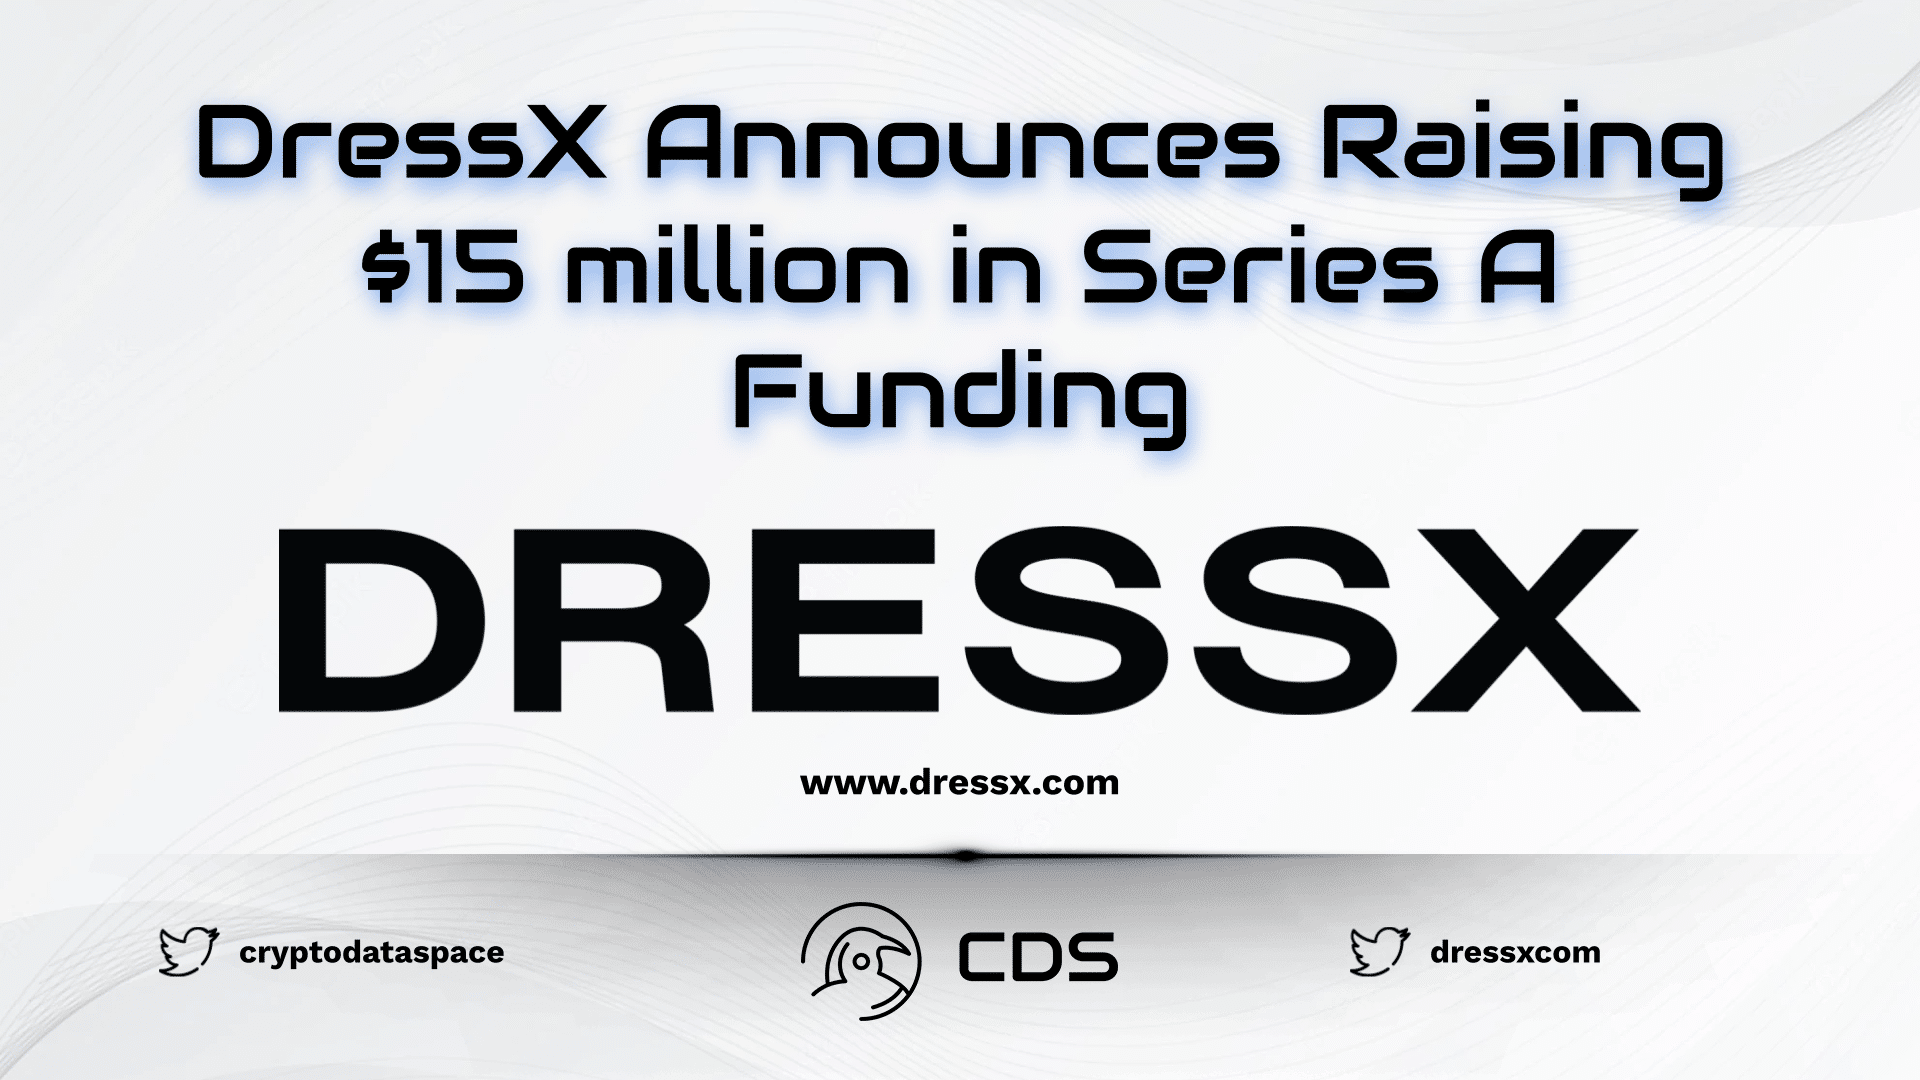 DressX Announces Raising $15 million in Series A Funding